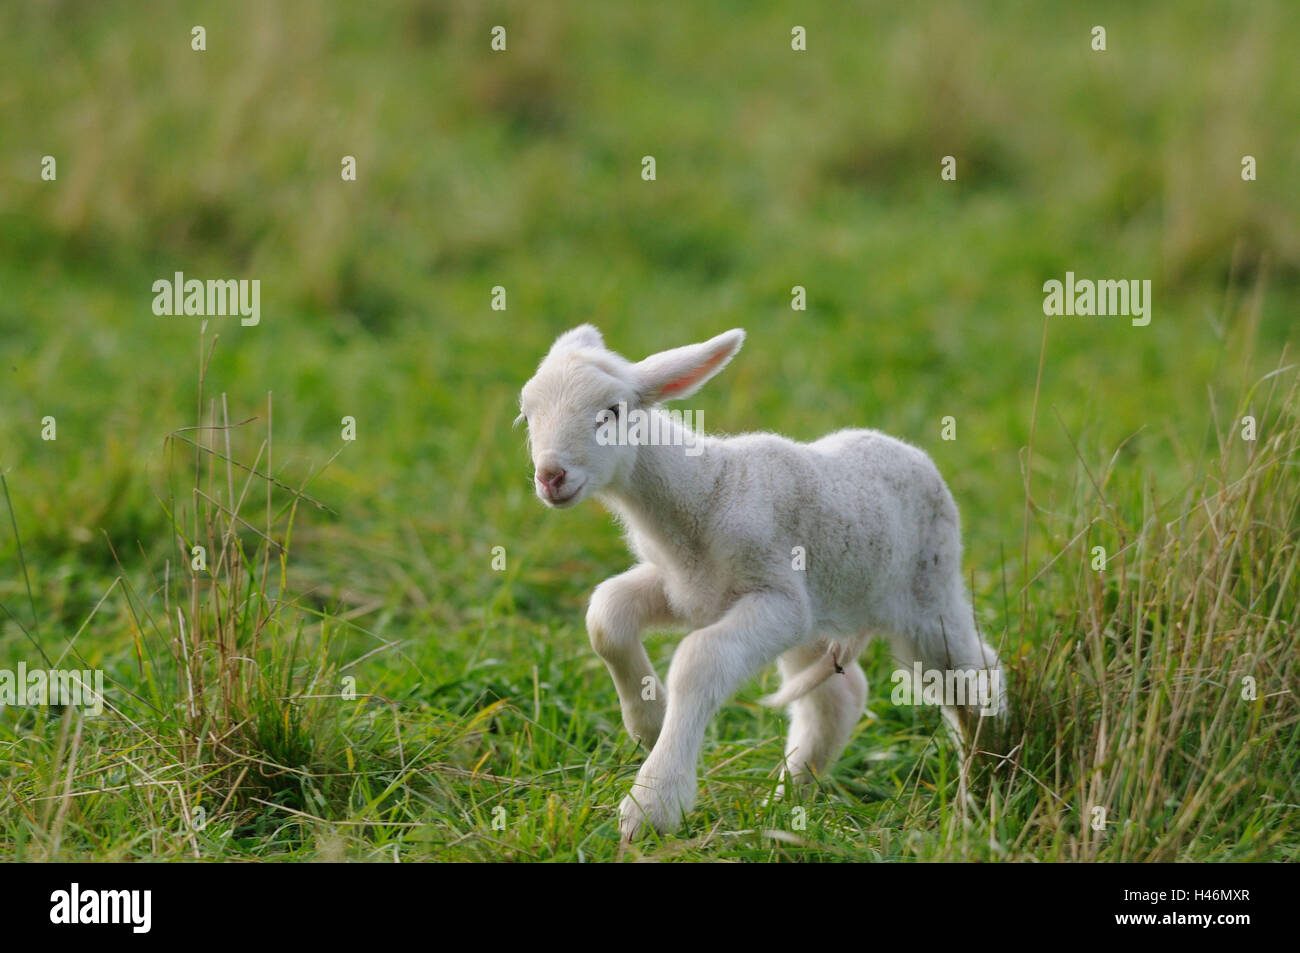 Domestic sheep, Ovis orientalis aries, lamb, front view, jumping, looking at camera, Stock Photo